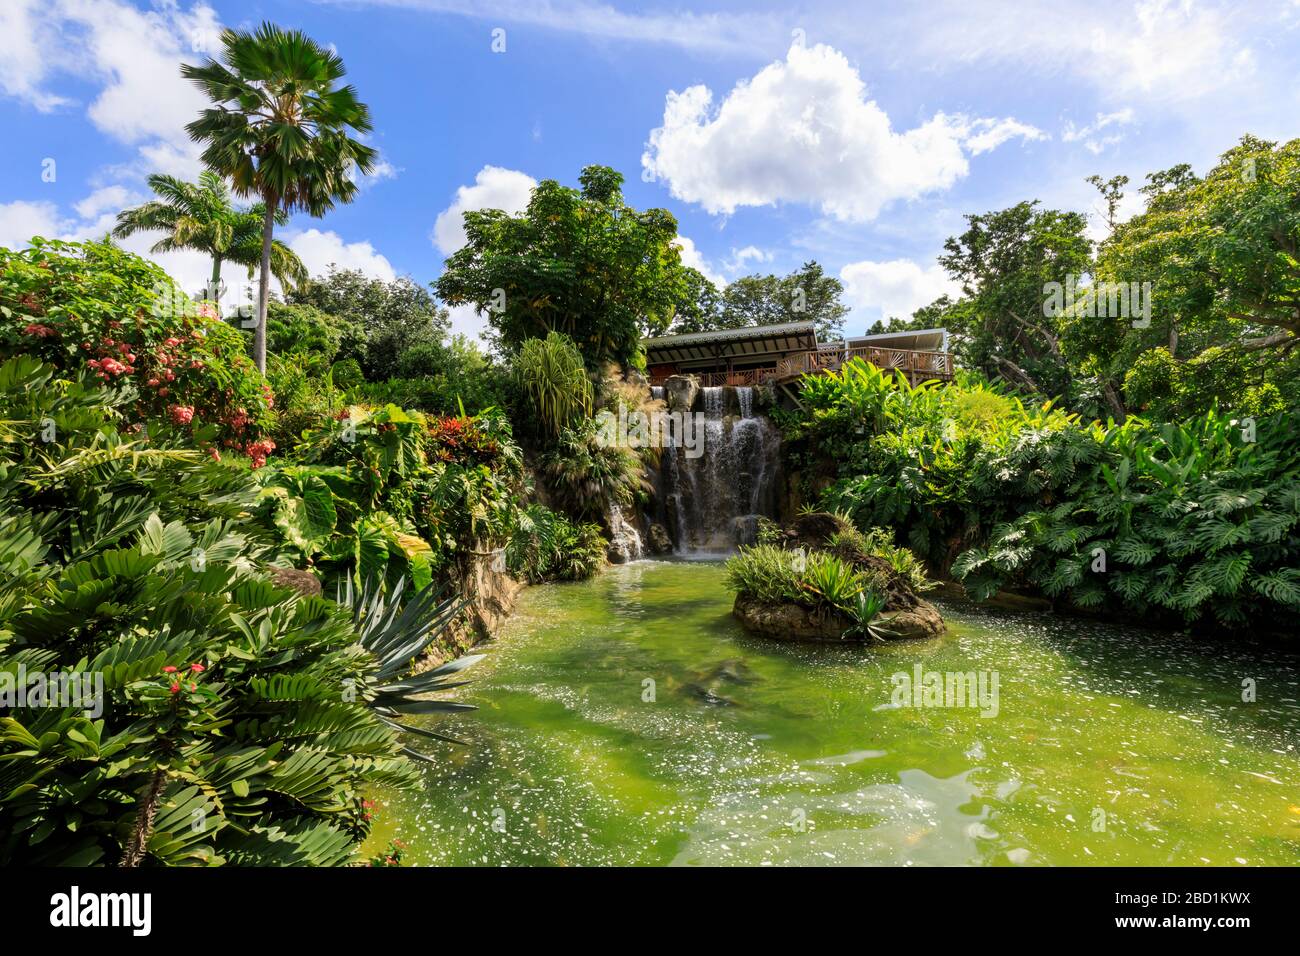 Jardin Botanique de Deshaies, botanic garden, Death In Paradise location, Deshaies, Basse Terre, Guadeloupe, Leeward Islands, Caribbean Stock Photo